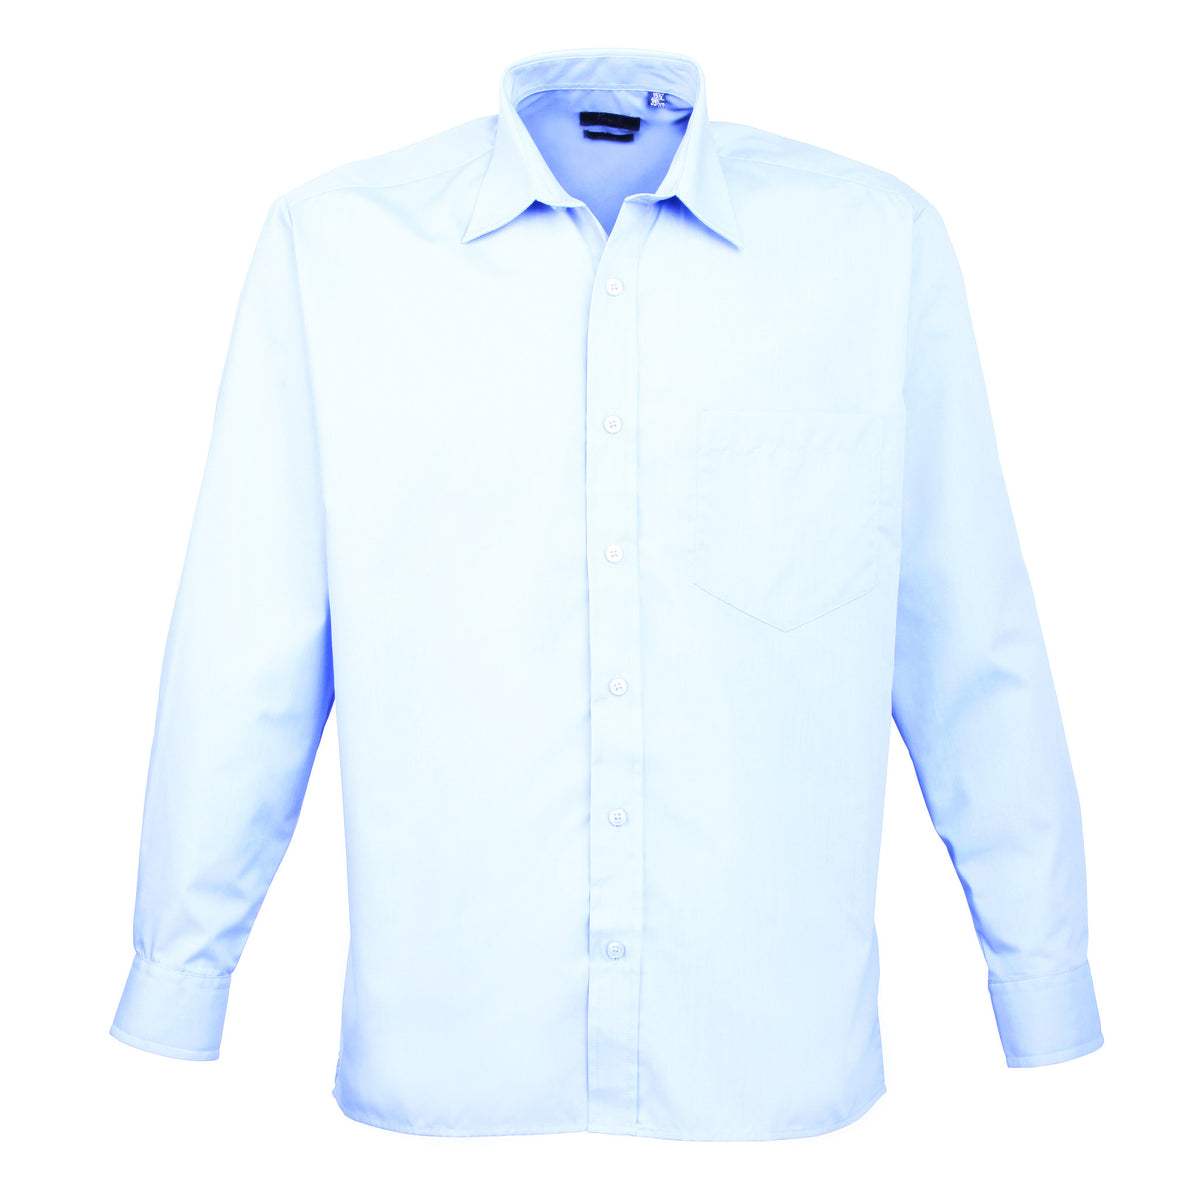 Premier Poplin Shirts (Sapphire, Turquoise, Light Blue, Mid Blue, Royal) - peterdrew.com
 - 4